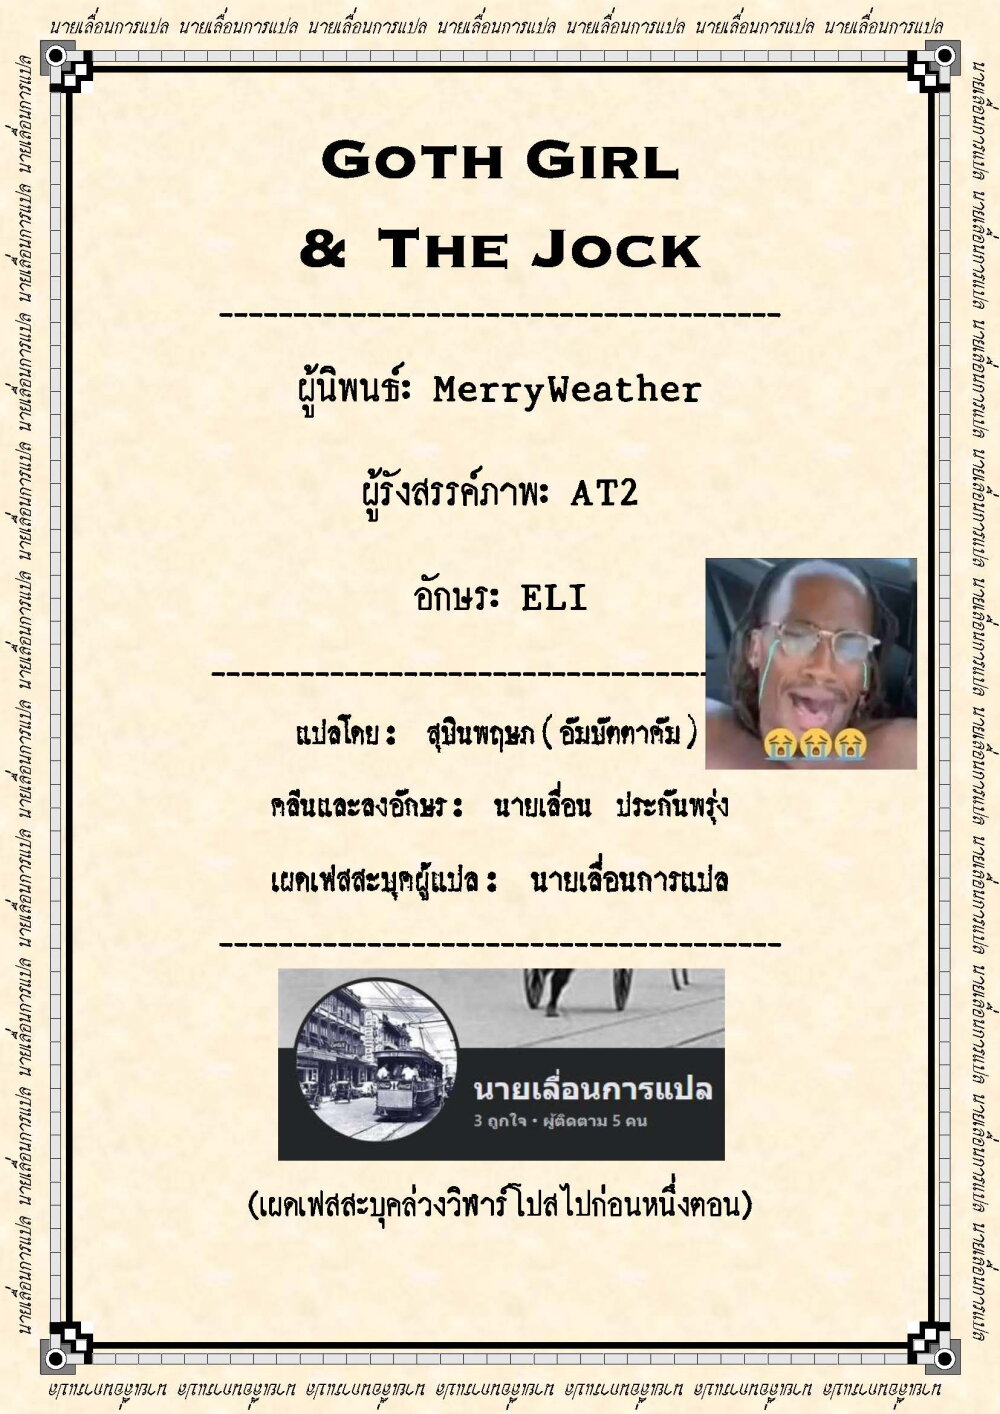 Goth Girl & The Jock 23 13